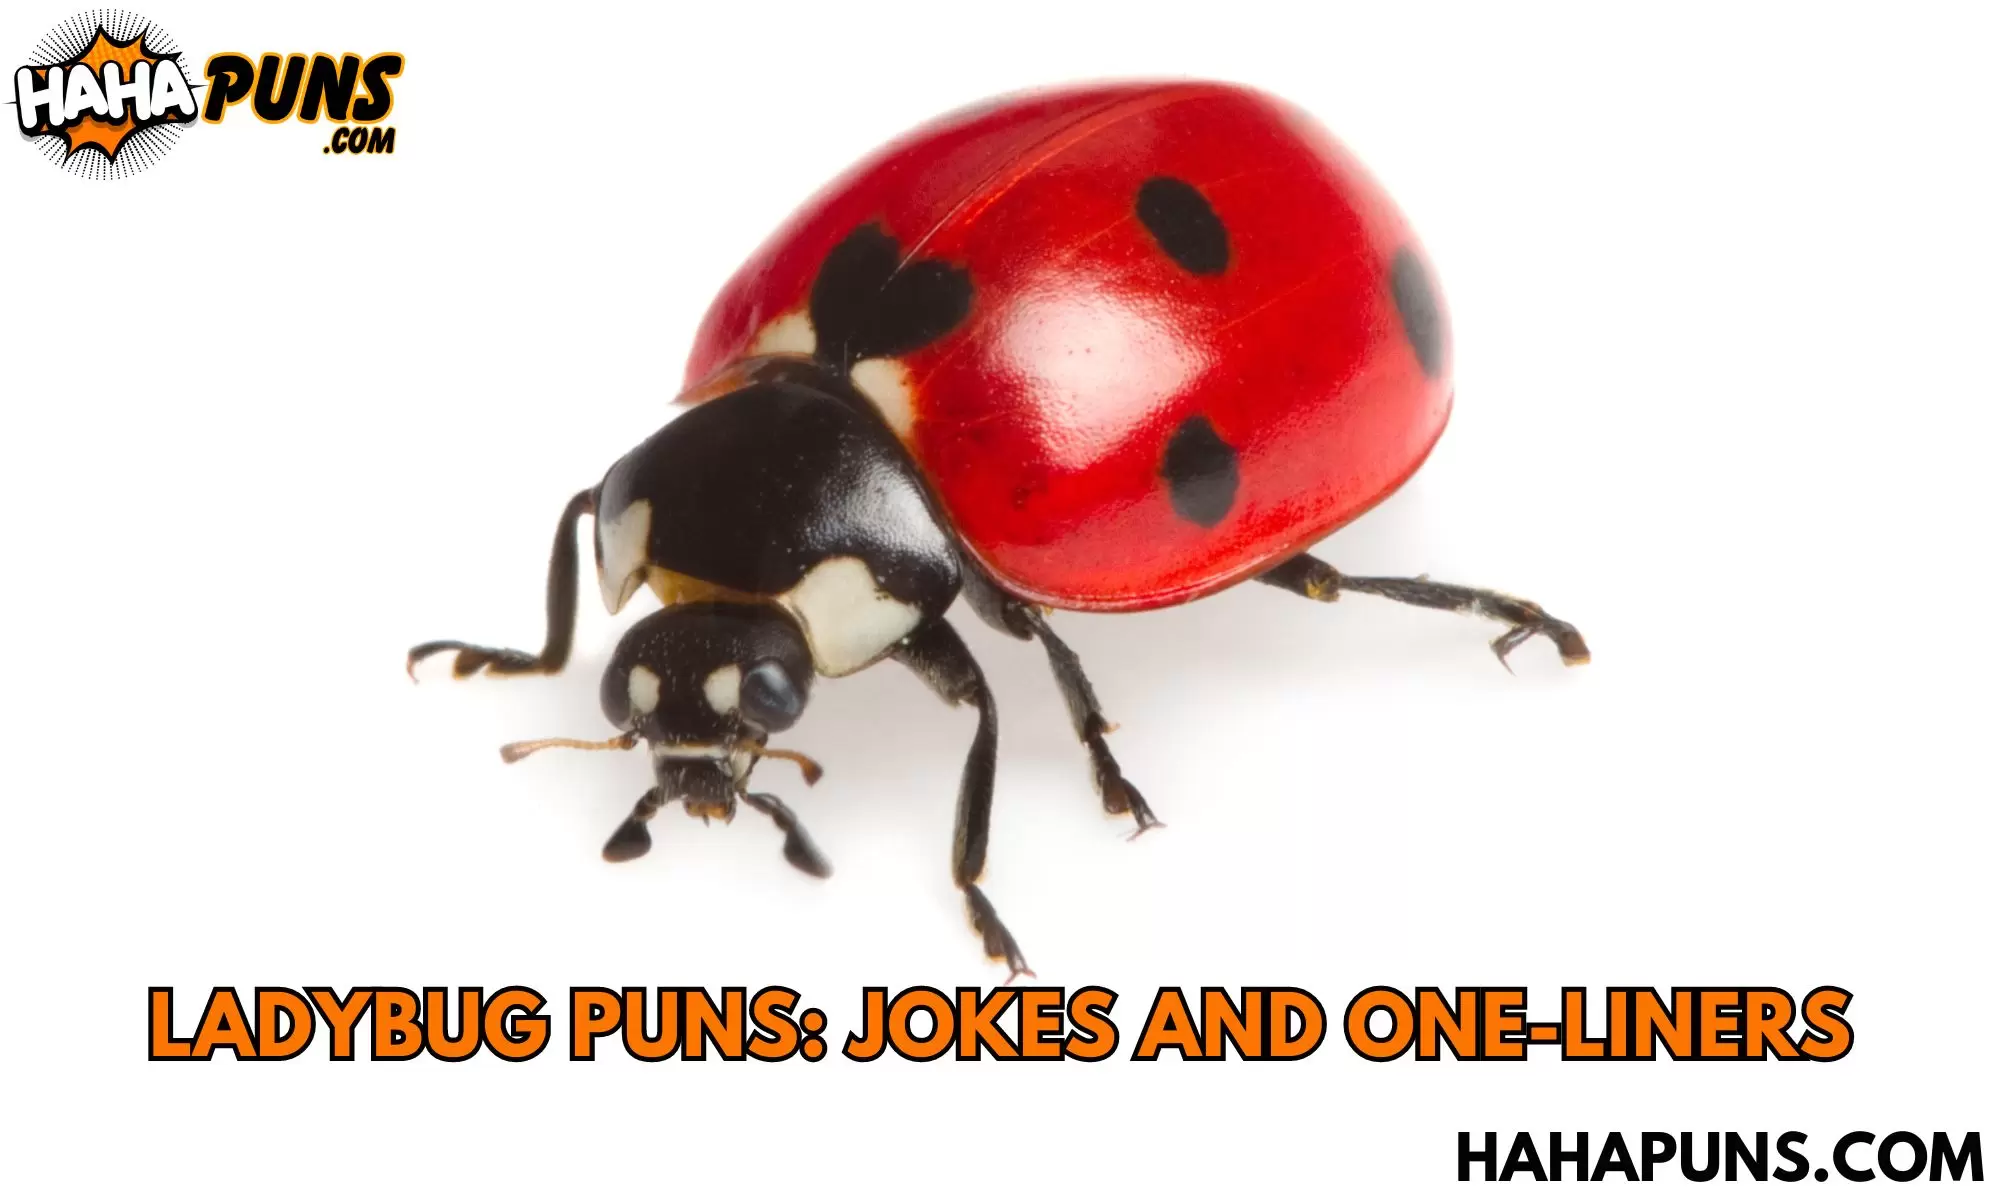 Ladybug Puns: Jokes And One-Liners